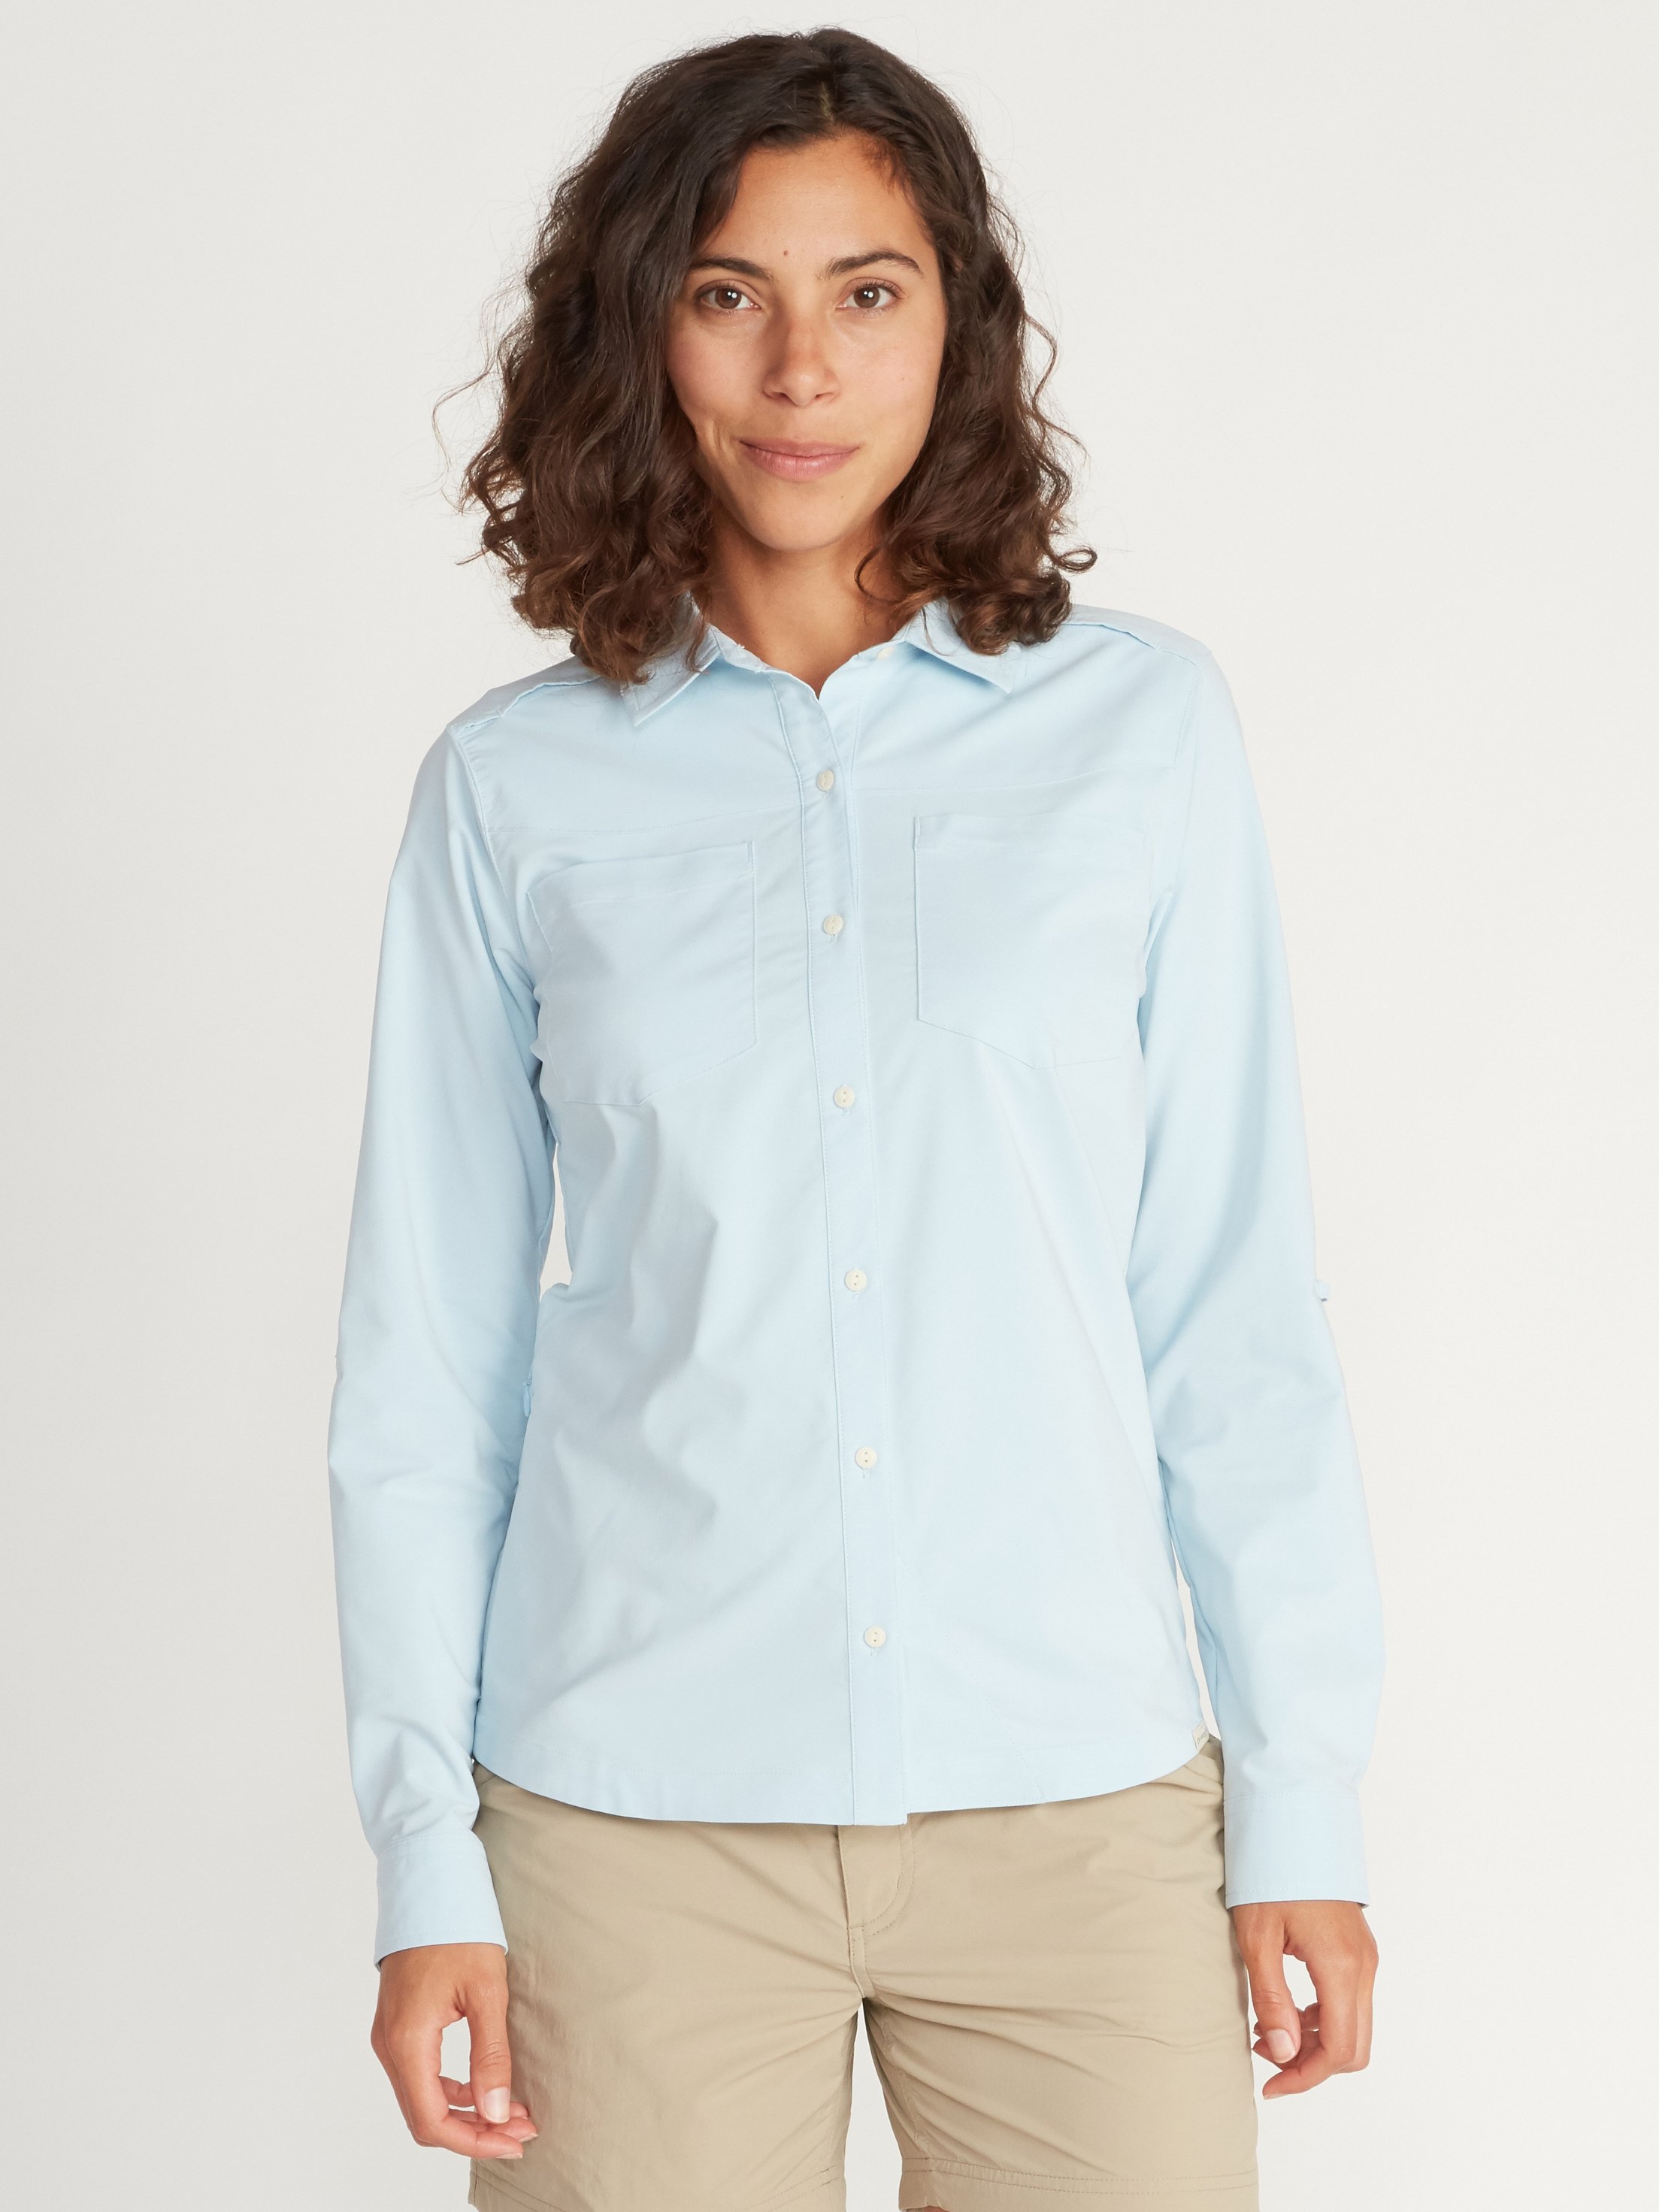 Women's Balandra Long-Sleeve Shirt | ExOfficio